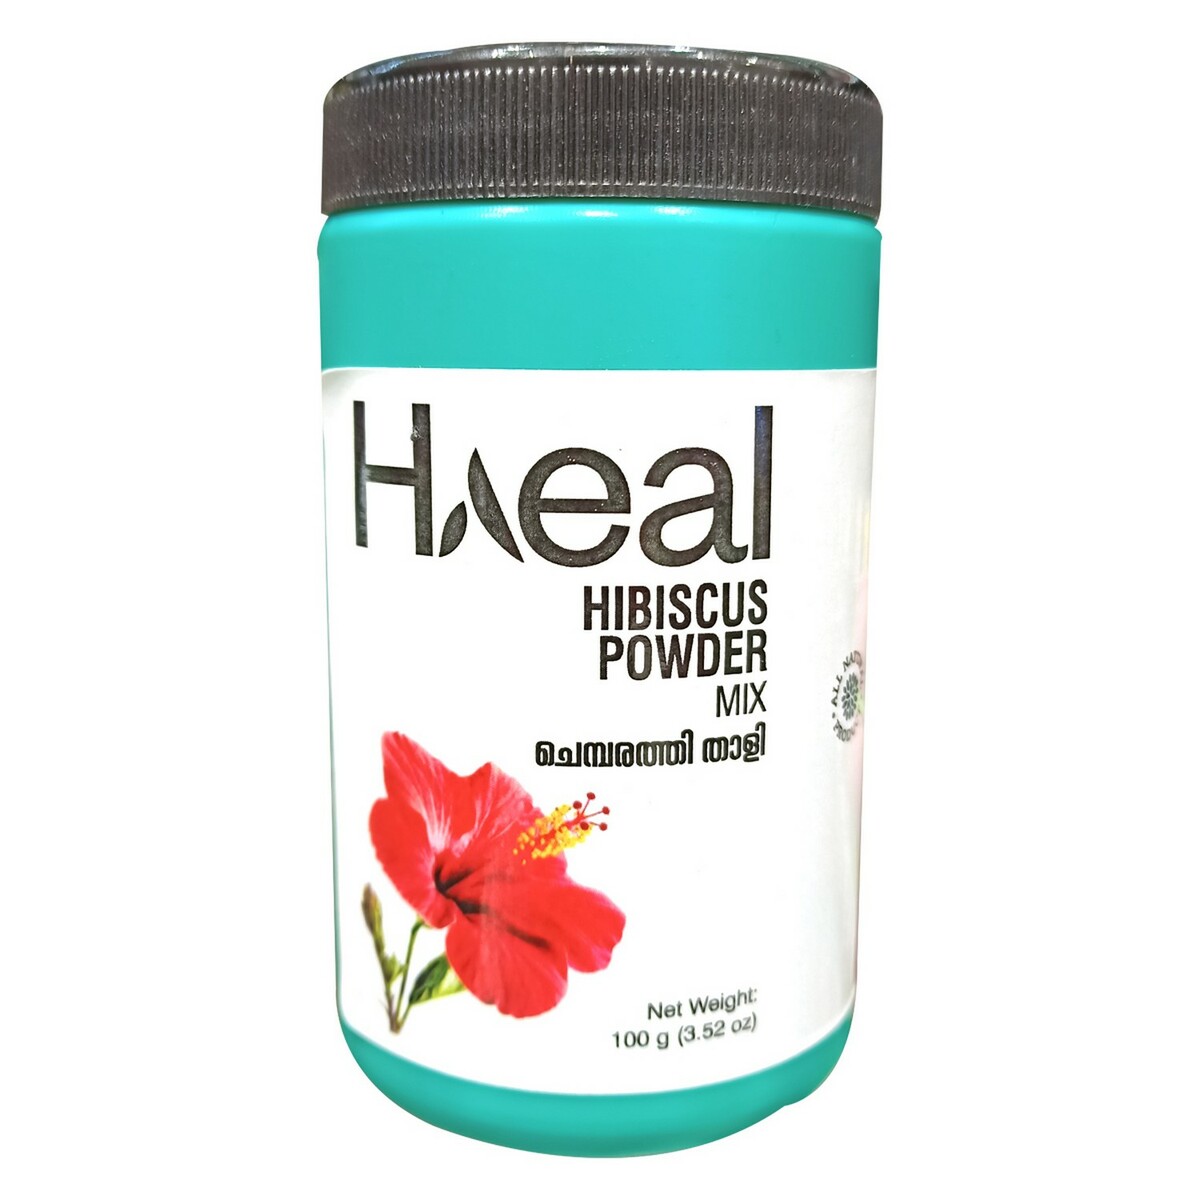 Haeal Hibiscus Powder 100g